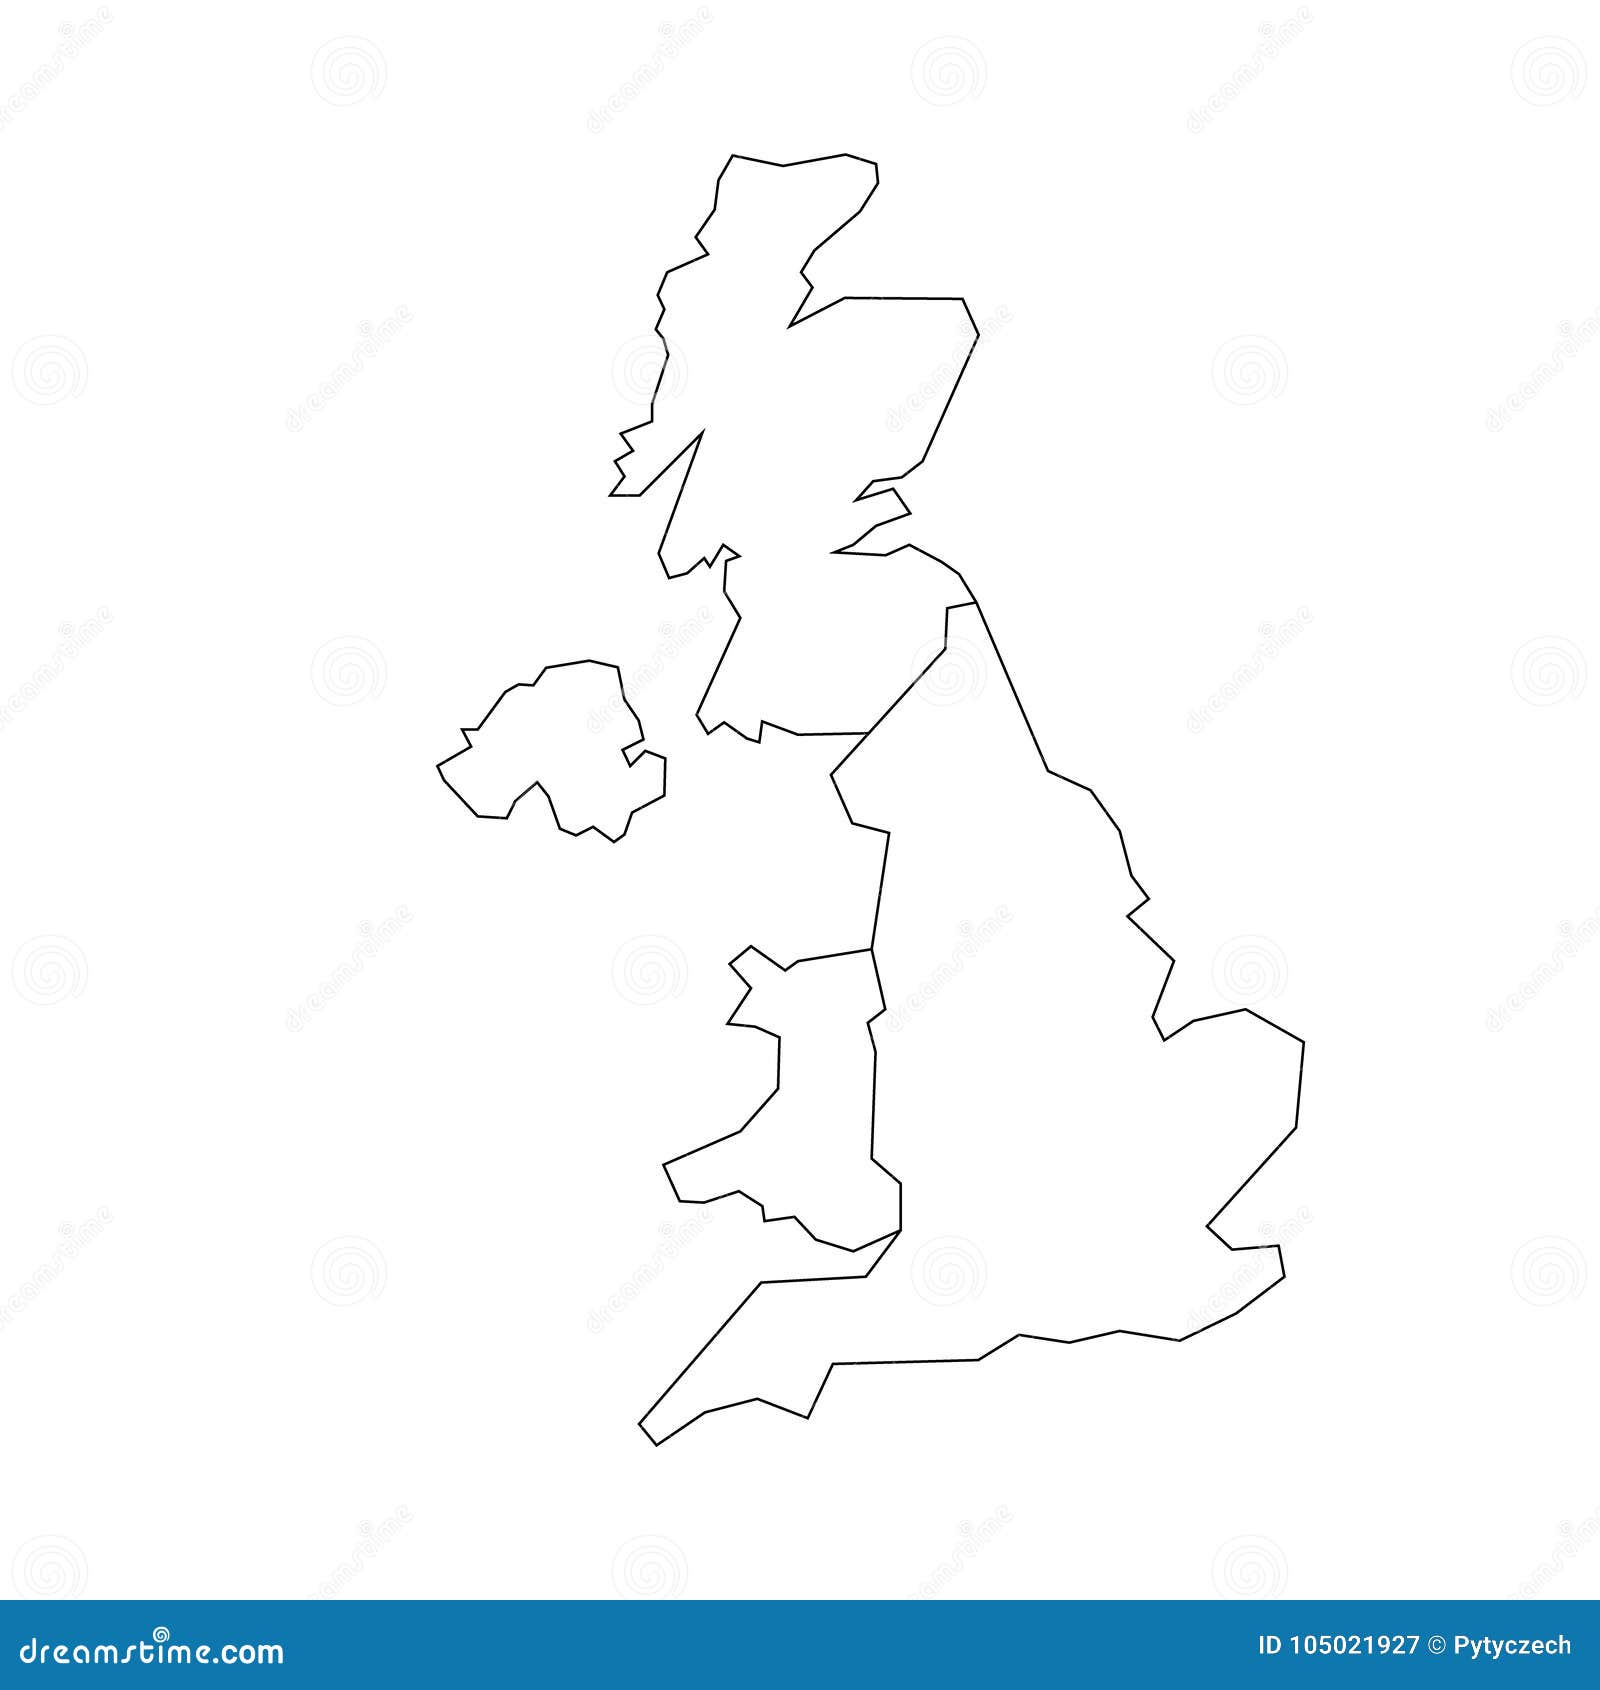 Контурная карта Великобритании. Контурная карта Шотландии. Карта Франции и Великобритании раскрасить.